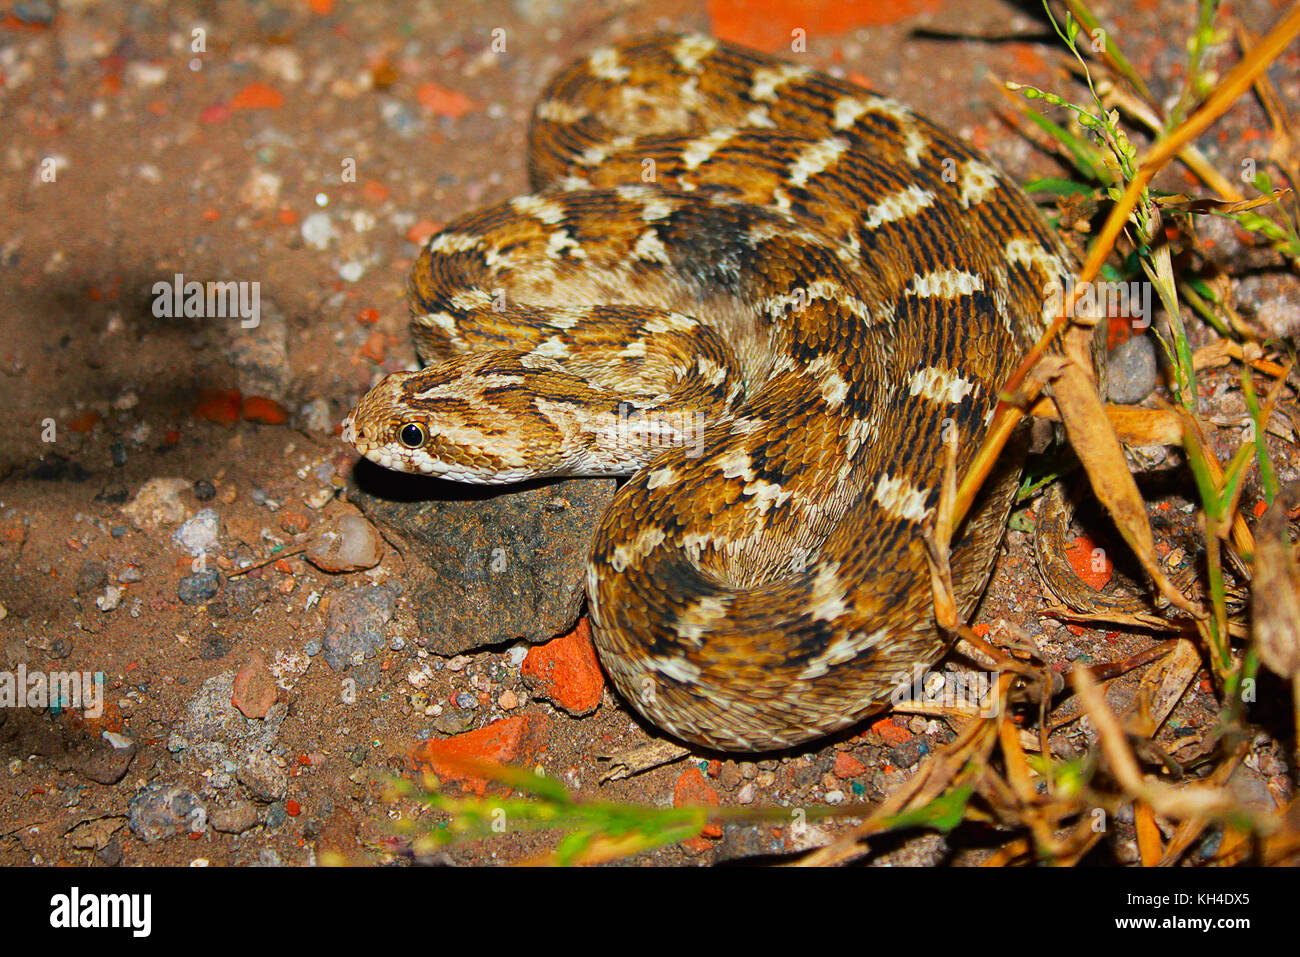 Schocker's Saw Scaled Viper, Echis carinatus sochureki, Jaisalmer, Rajasthan, India Stock Photo